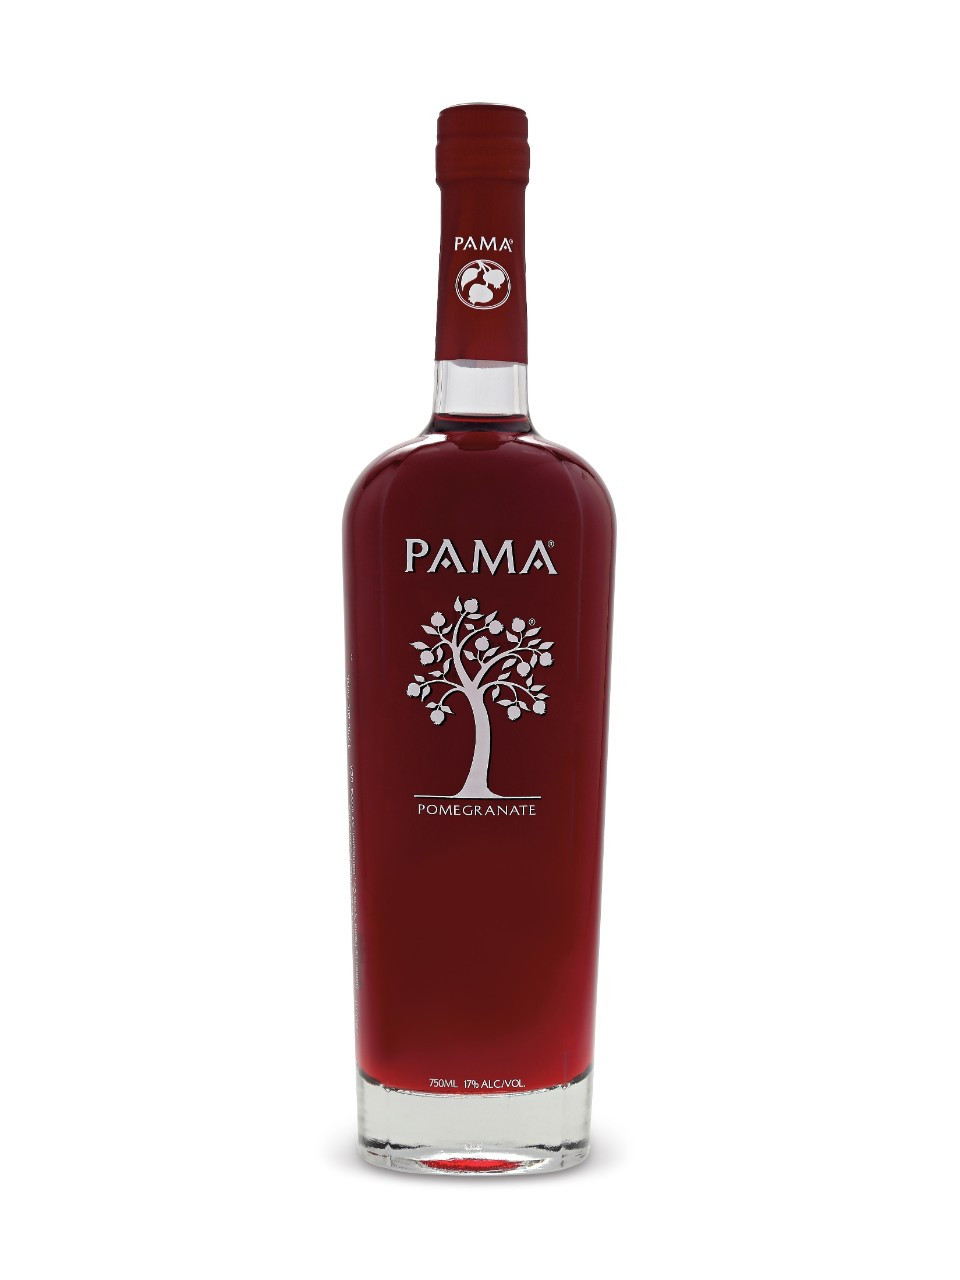 Pama pomegranate liquor  750 ml bottle